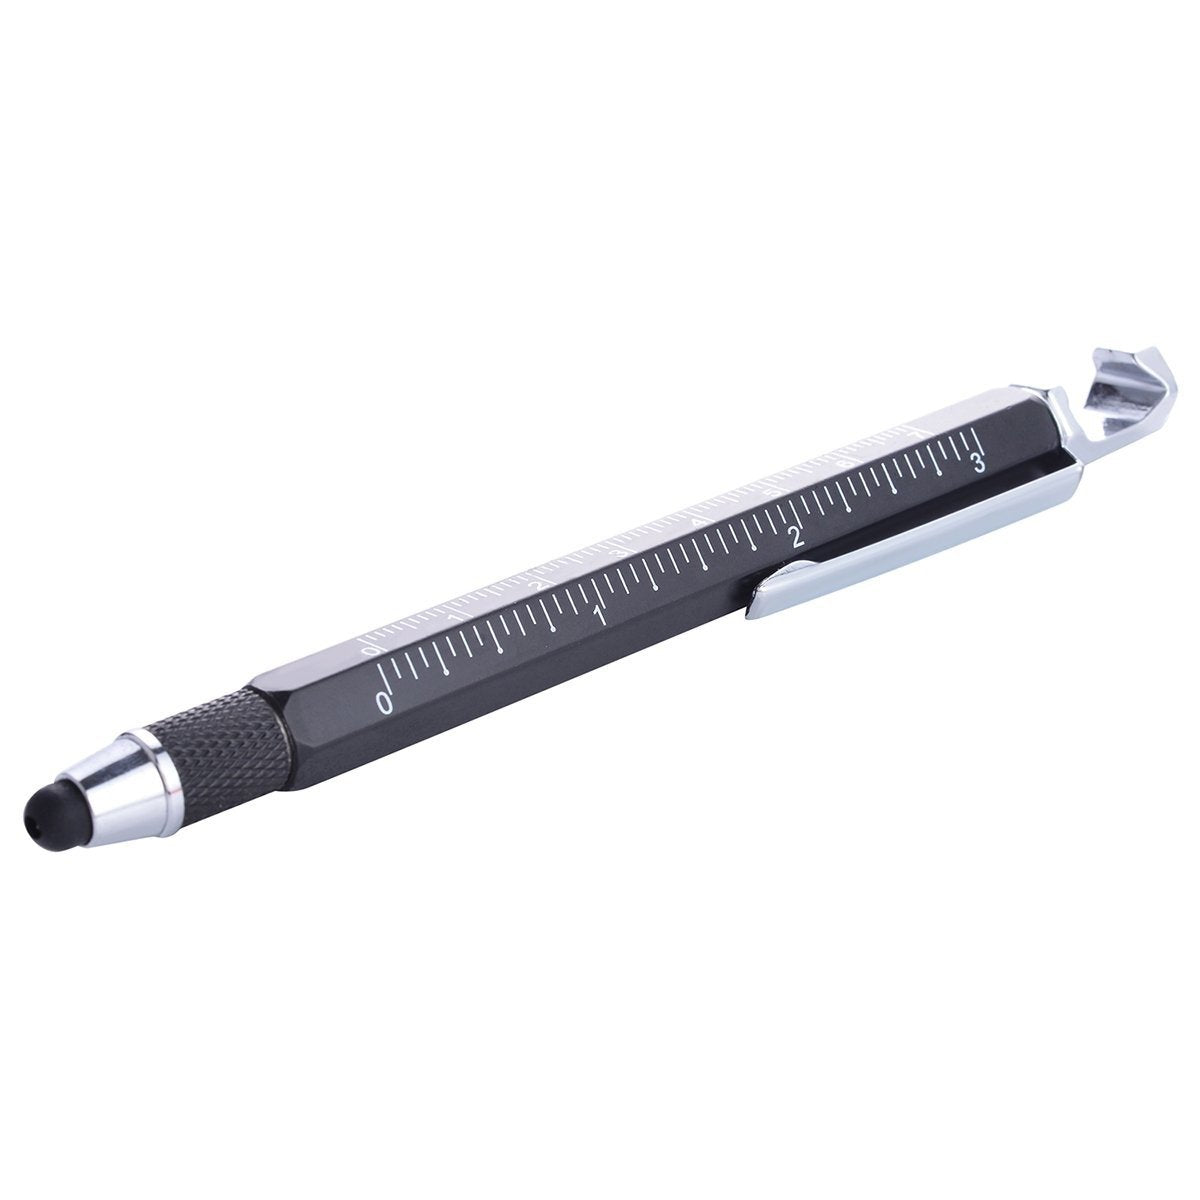 Le Stylo Multifonction  Tech Tool Pen - CoolGift